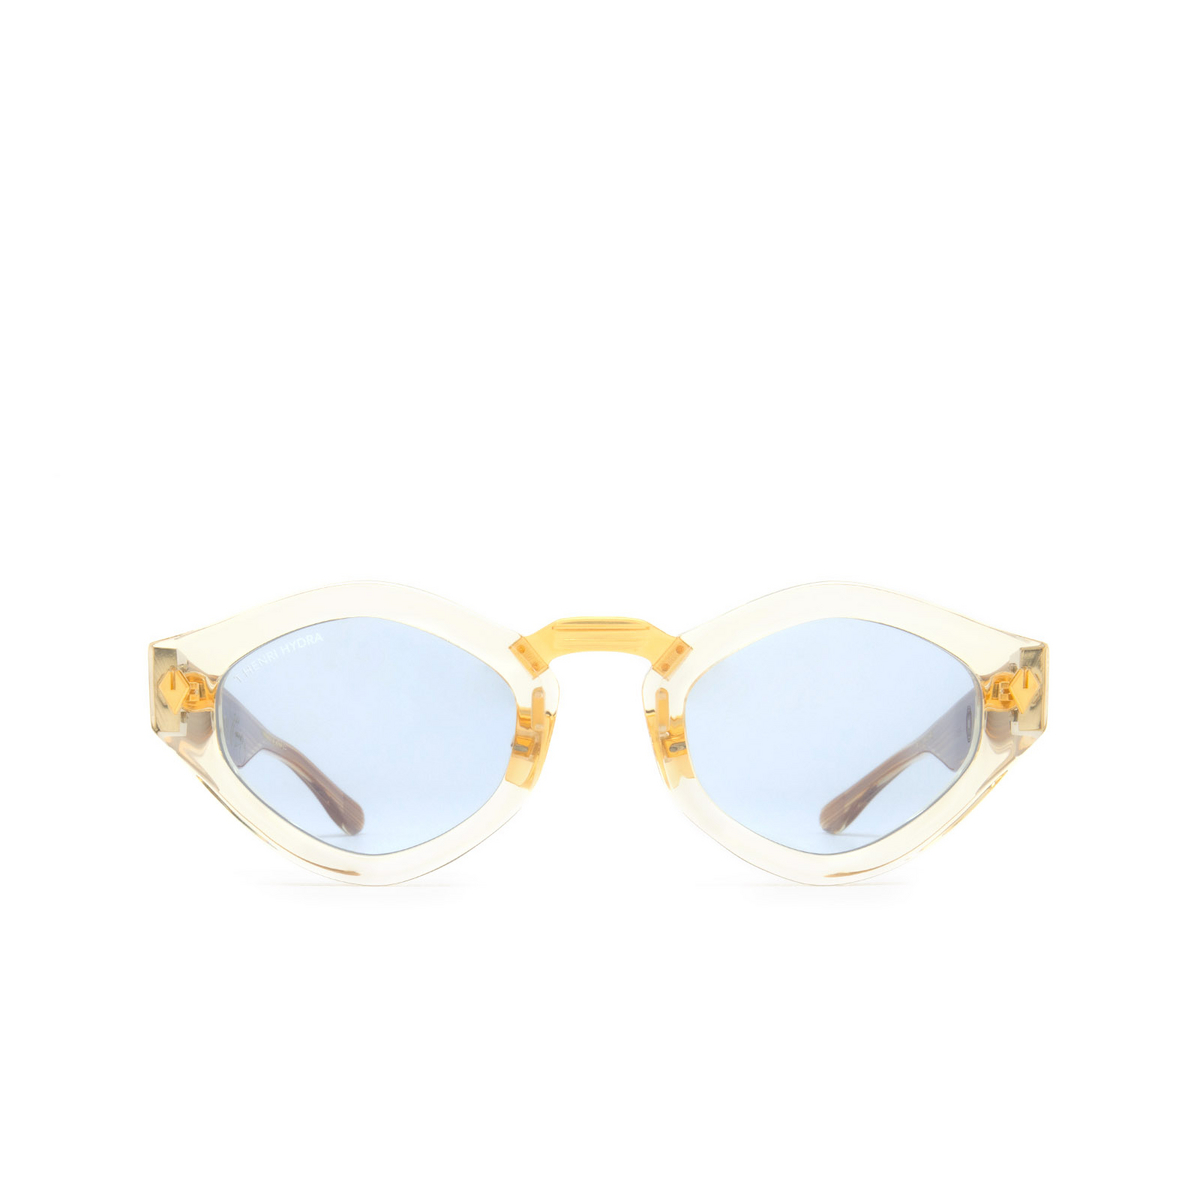 T Henri HYDRA Sunglasses CHAMPAGNE - front view